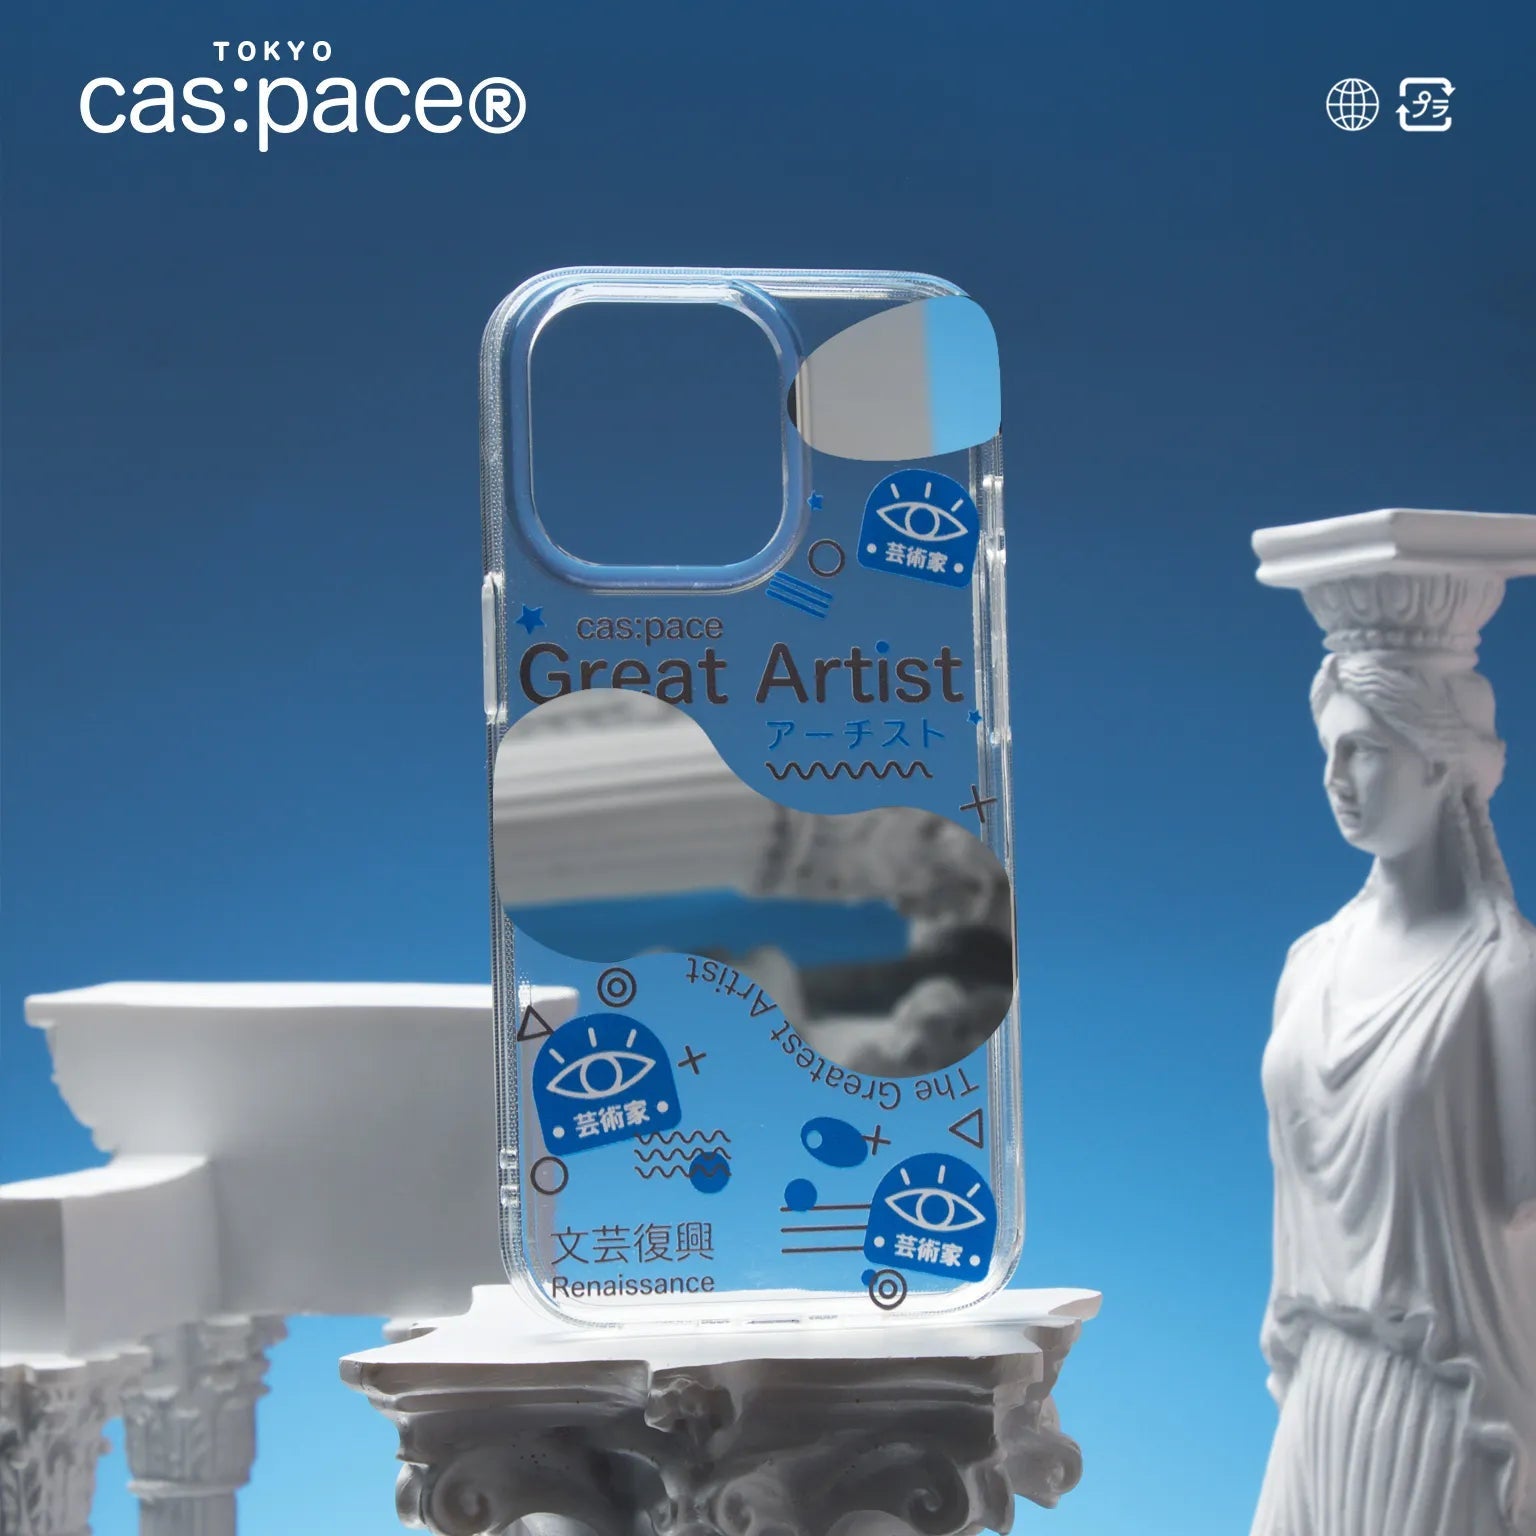 cas:pace 22S/S「アーチスト」携帯ケース - cas:pace 殼空間